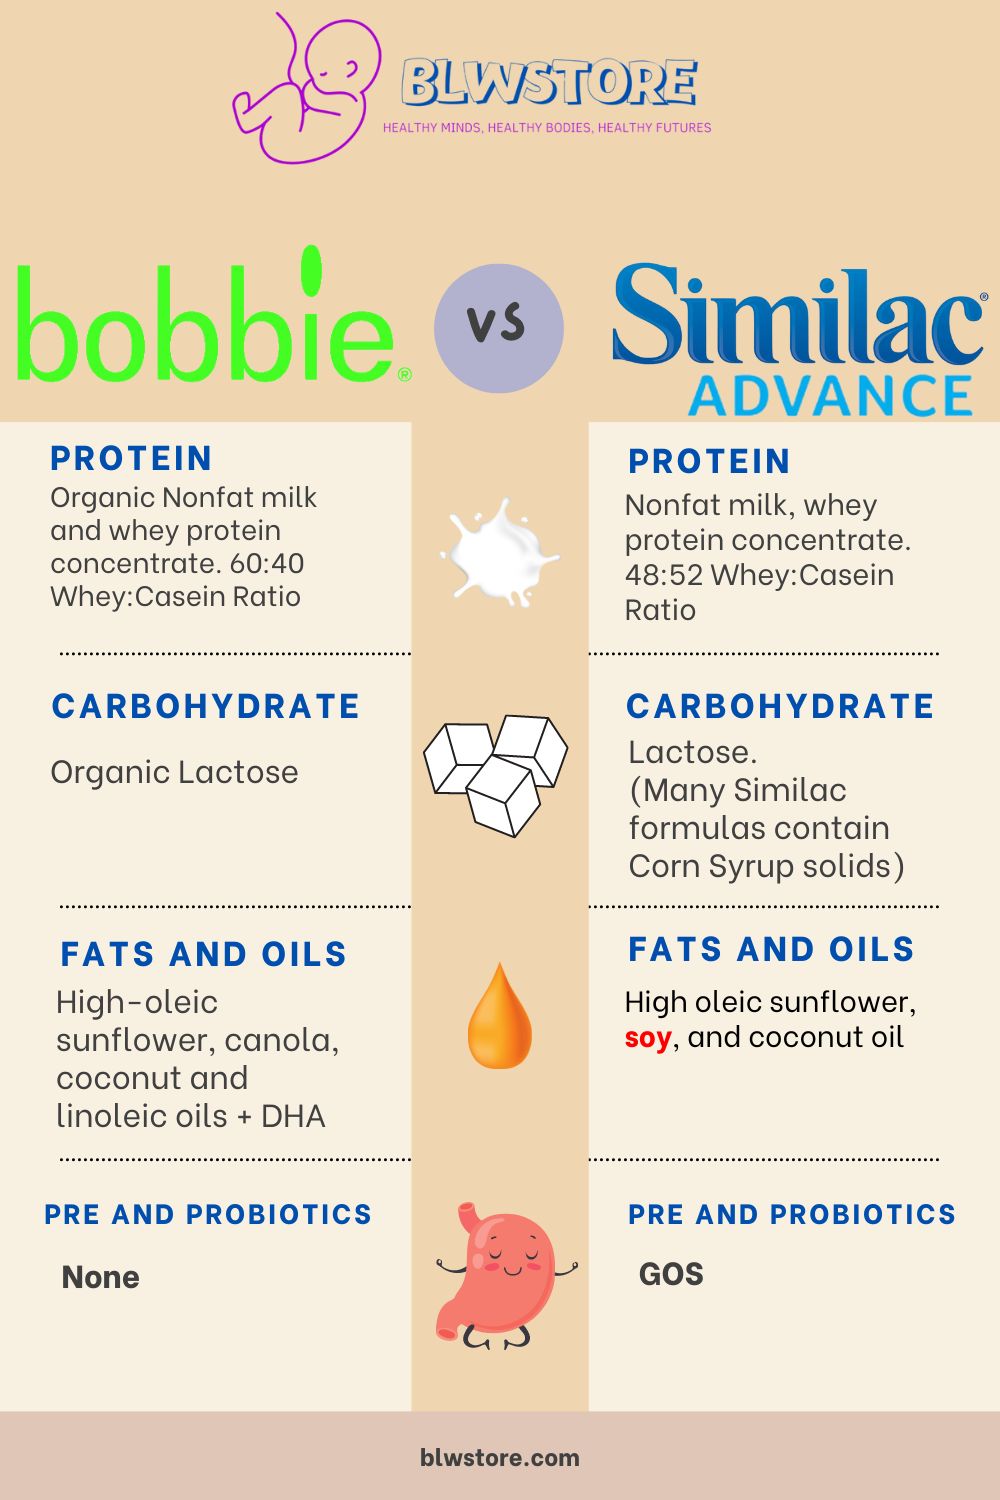 Bobbie vs Similac Advance Infographic